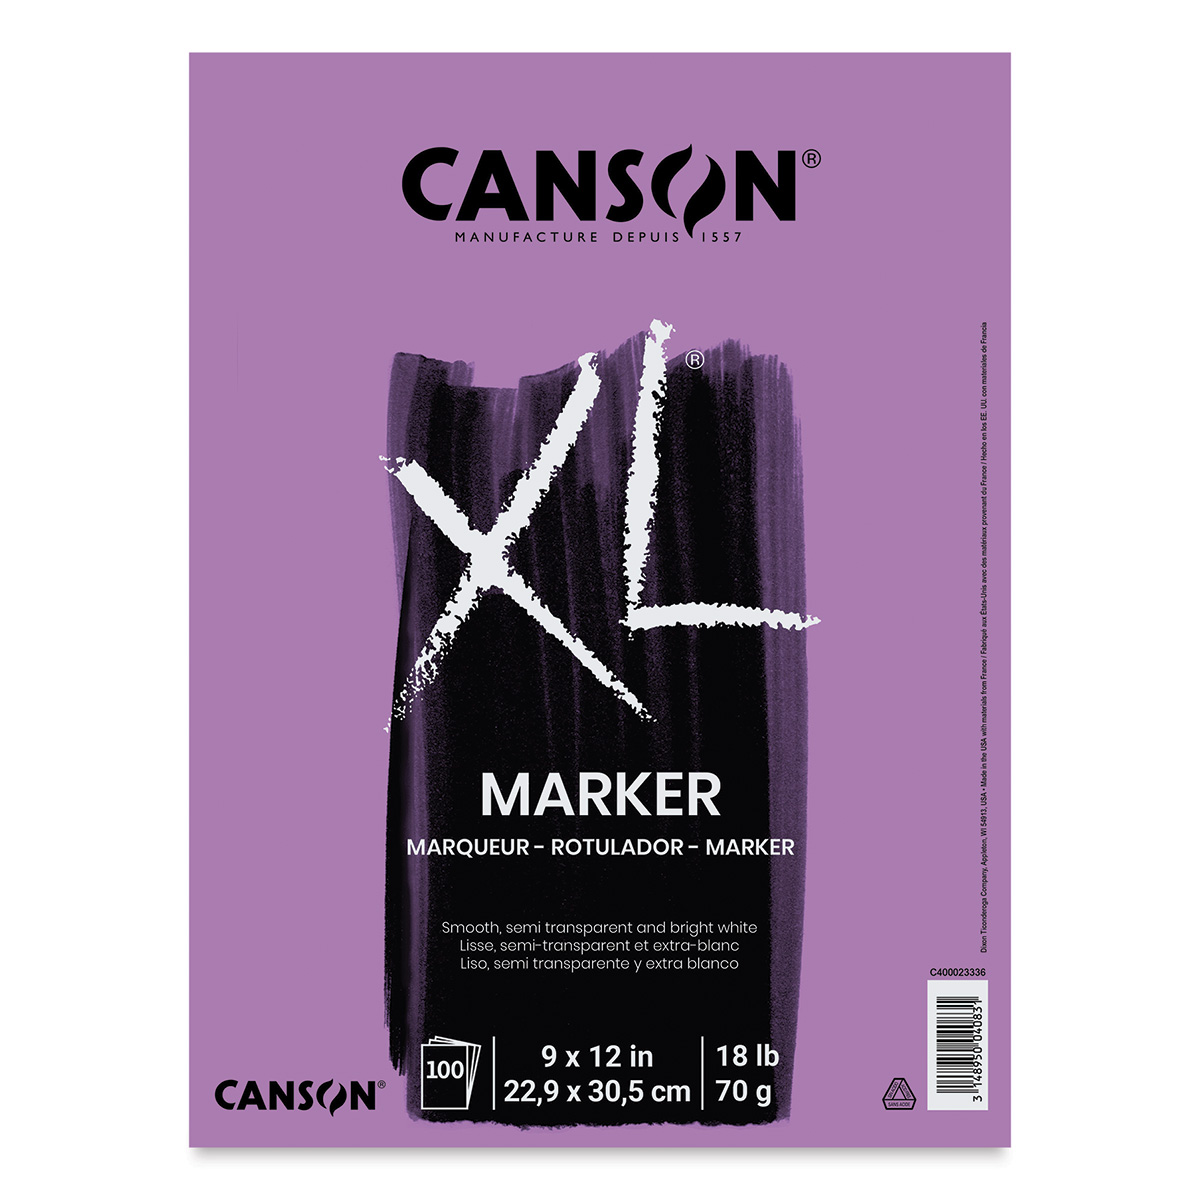 Canson XL Series Rough Mix Media 7 x 10